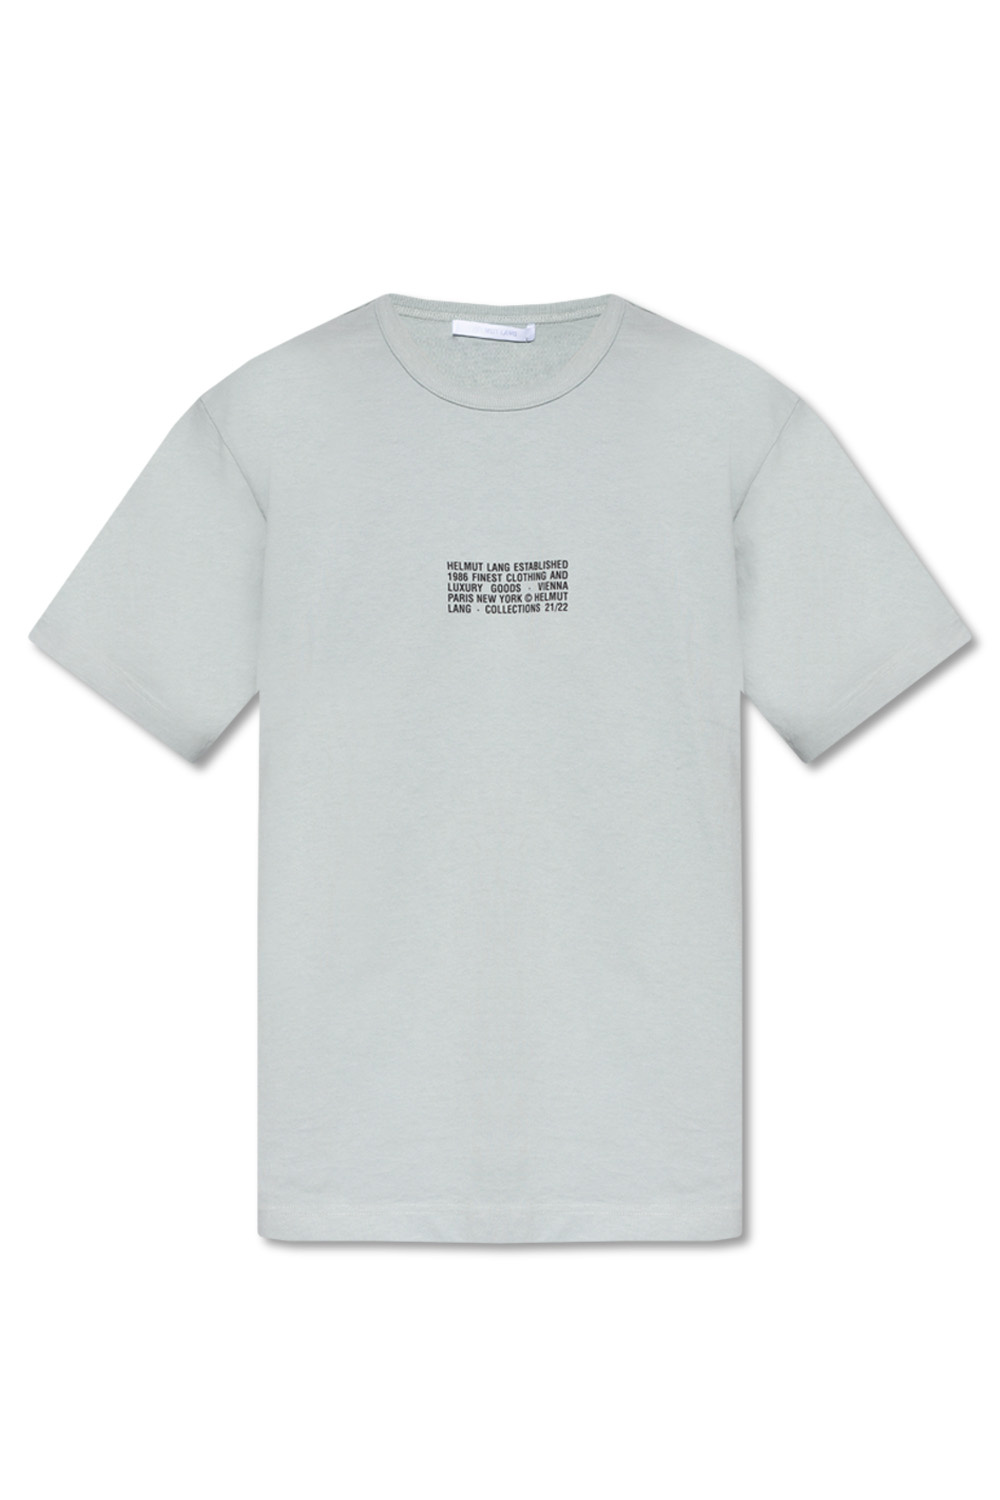 shirt Helmut Lang - Levis t-shirt big logo футболка - Grey Printed